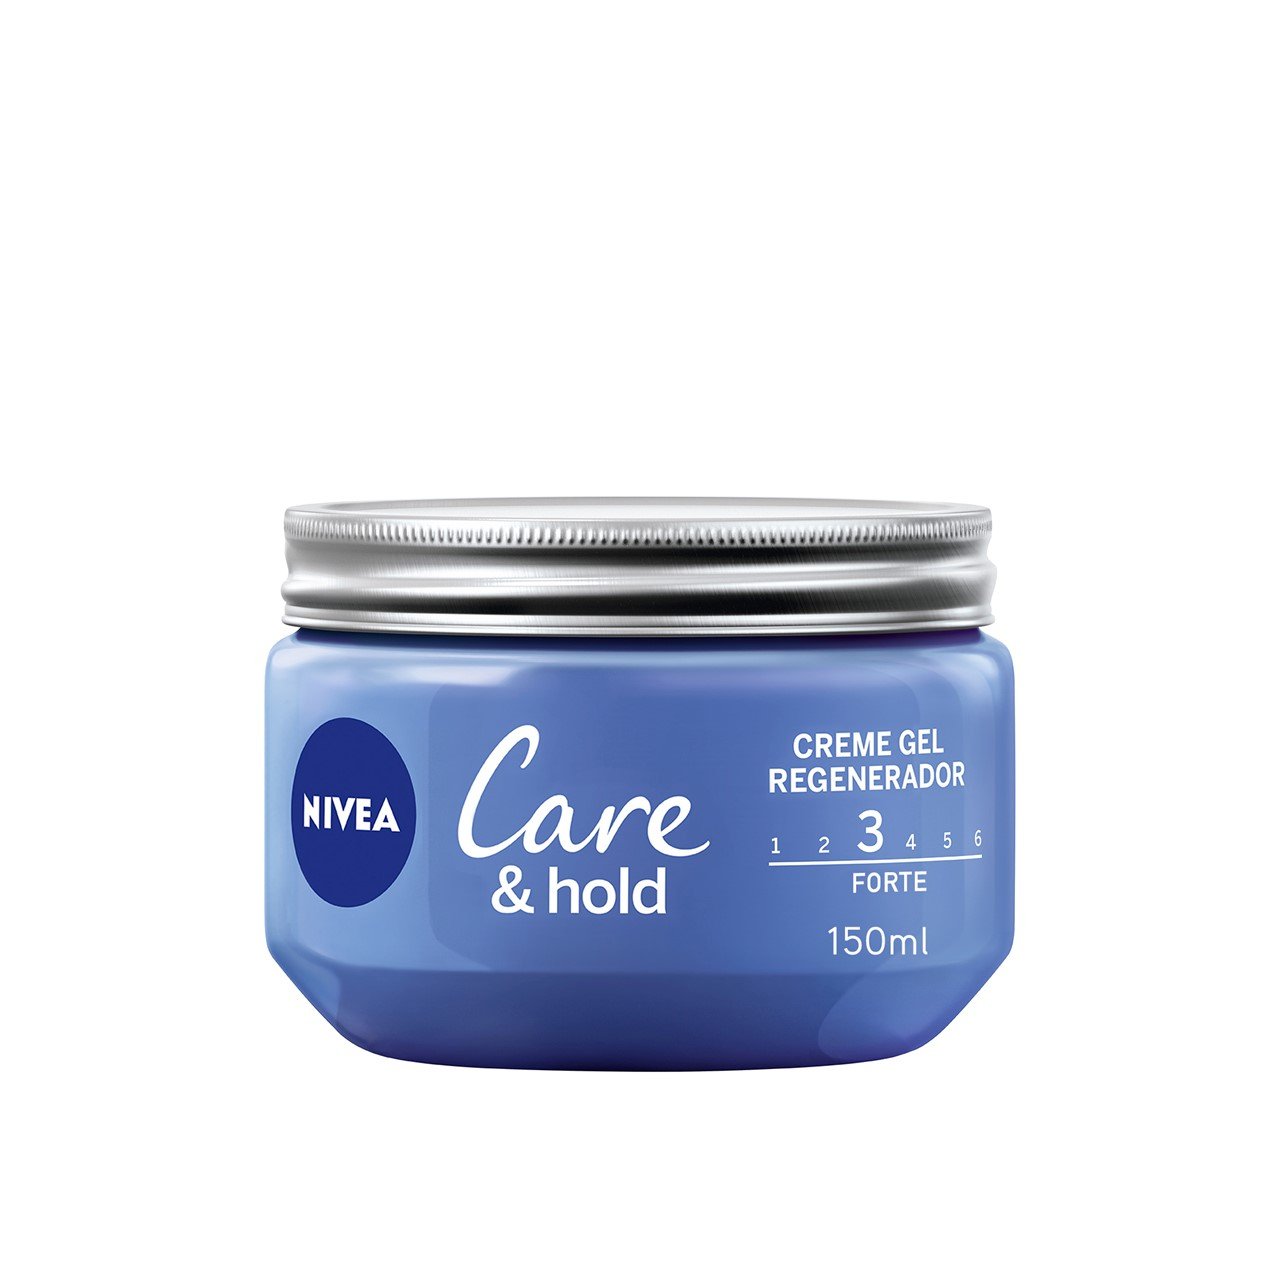 NIVEA Care & Hold Hair Styling Gel, 150 ml - oh feliz